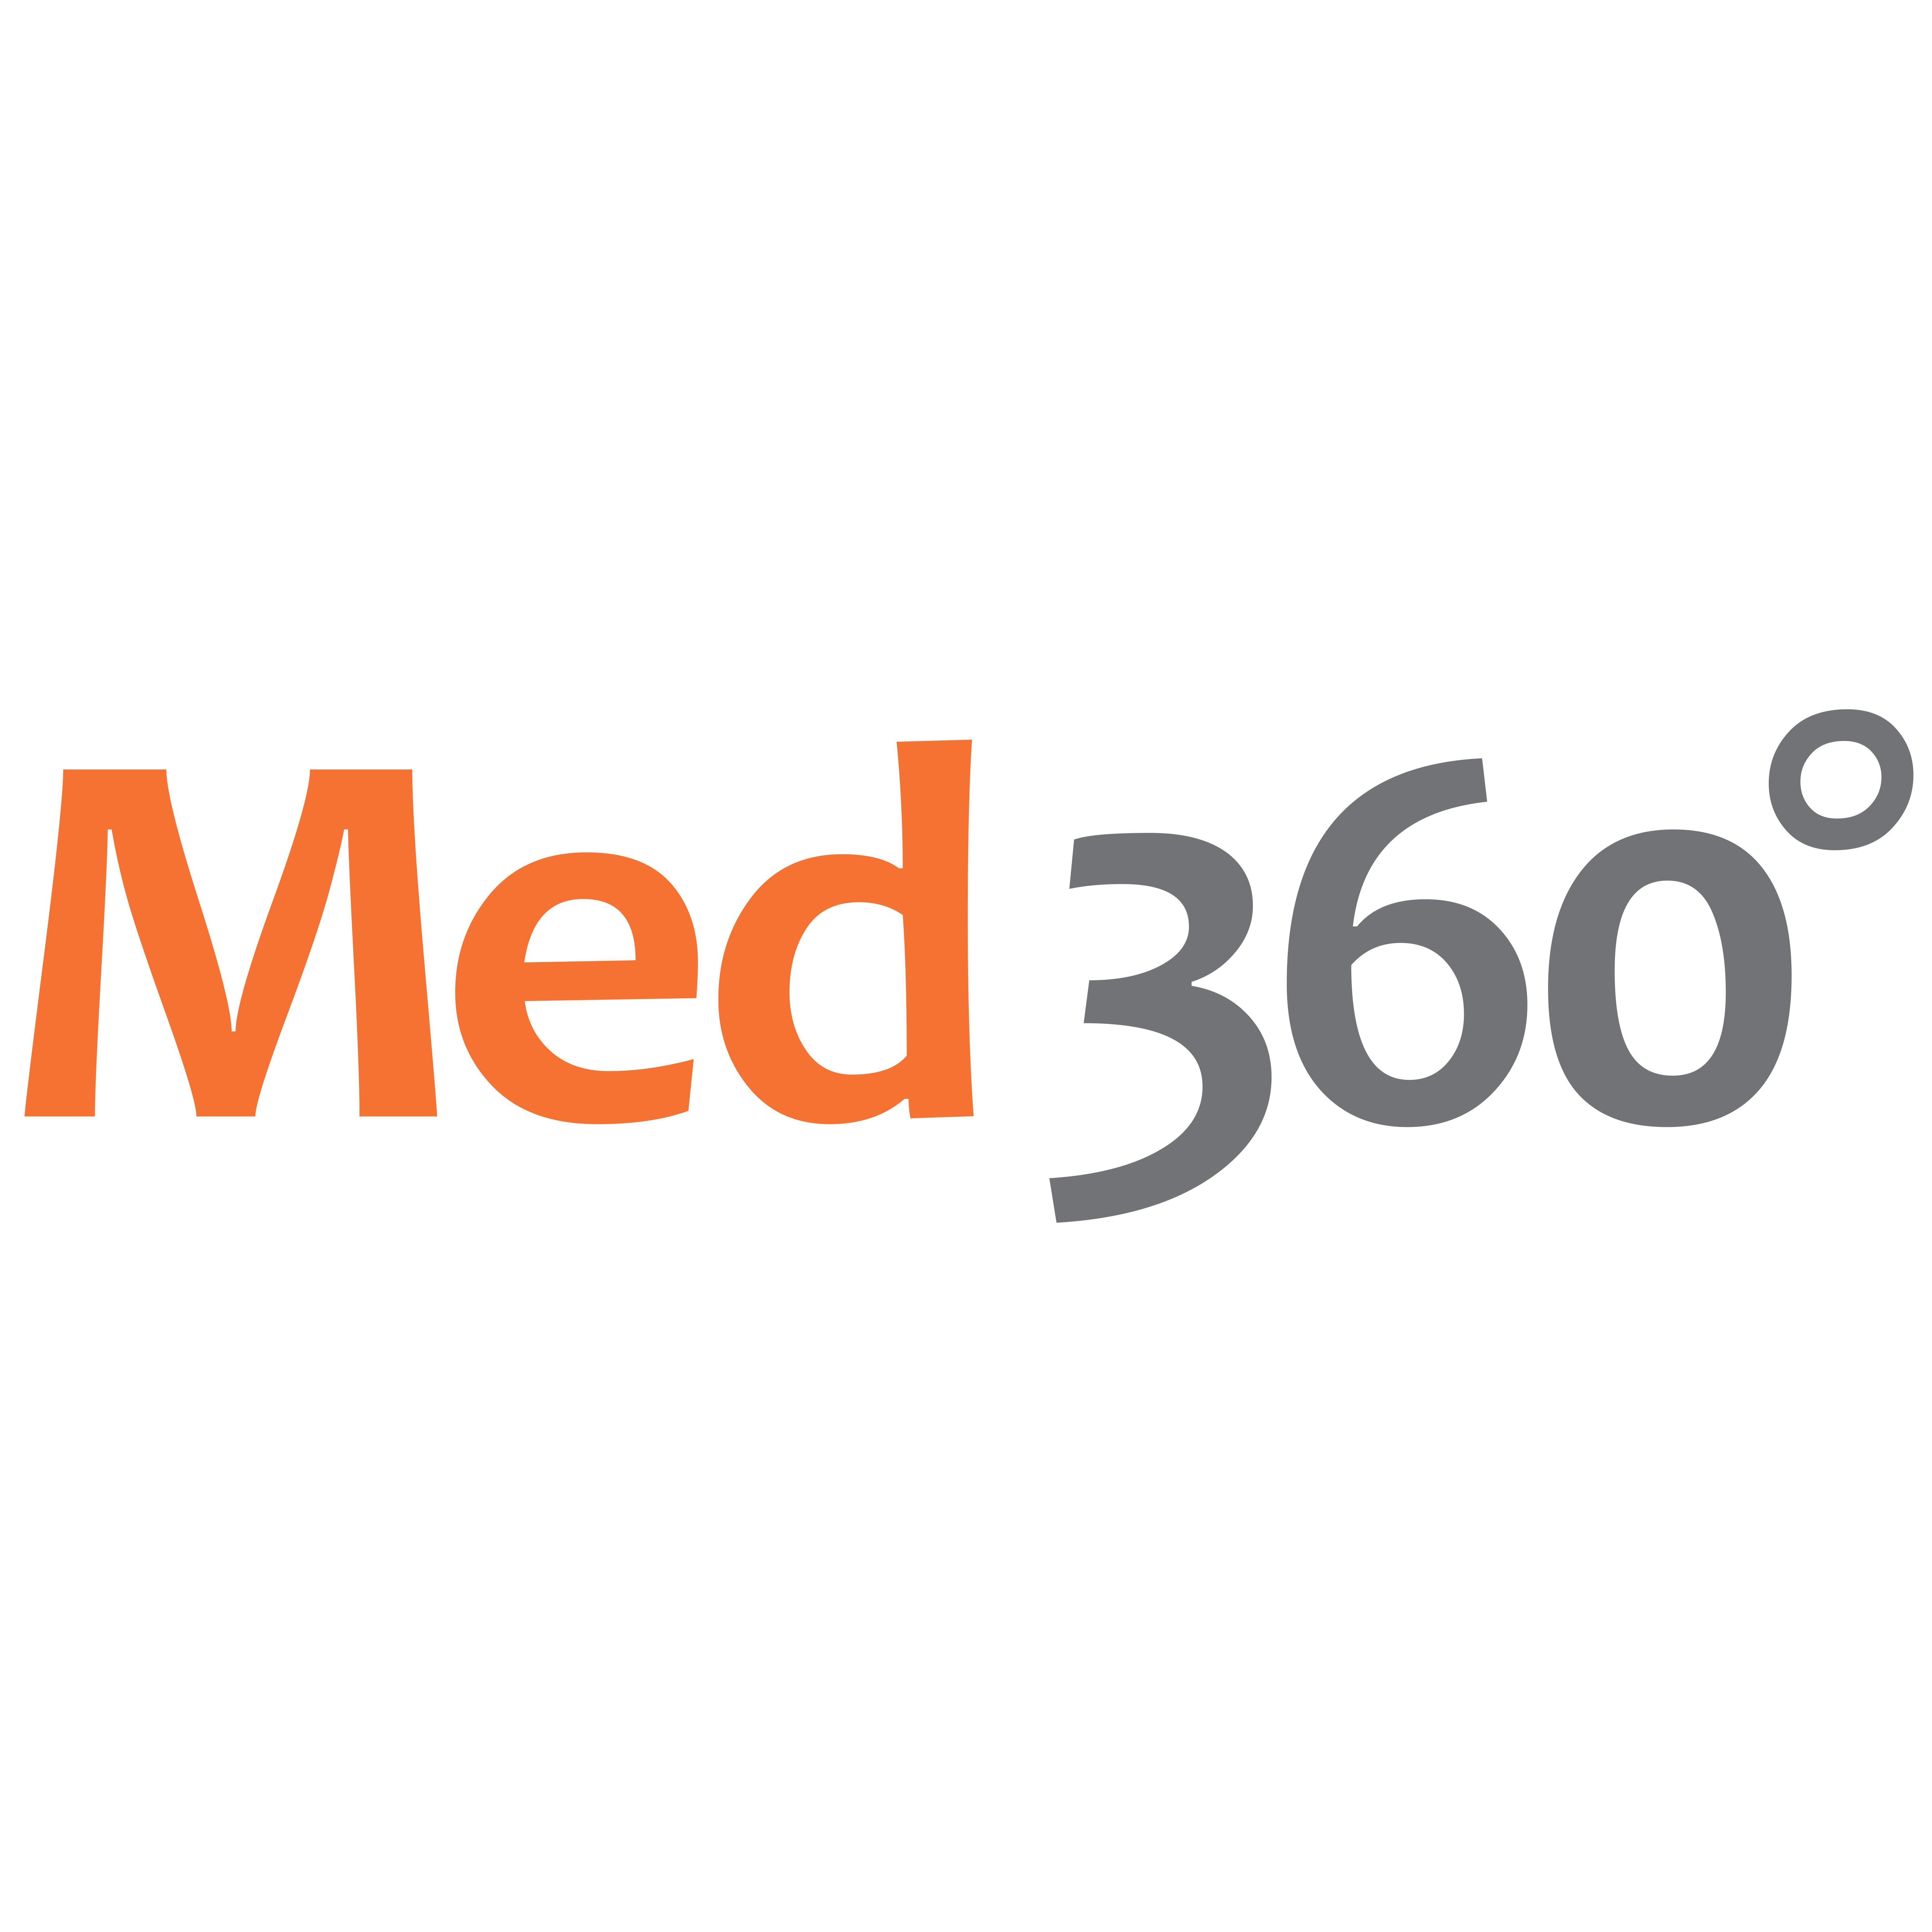 Logo Med 360° SE